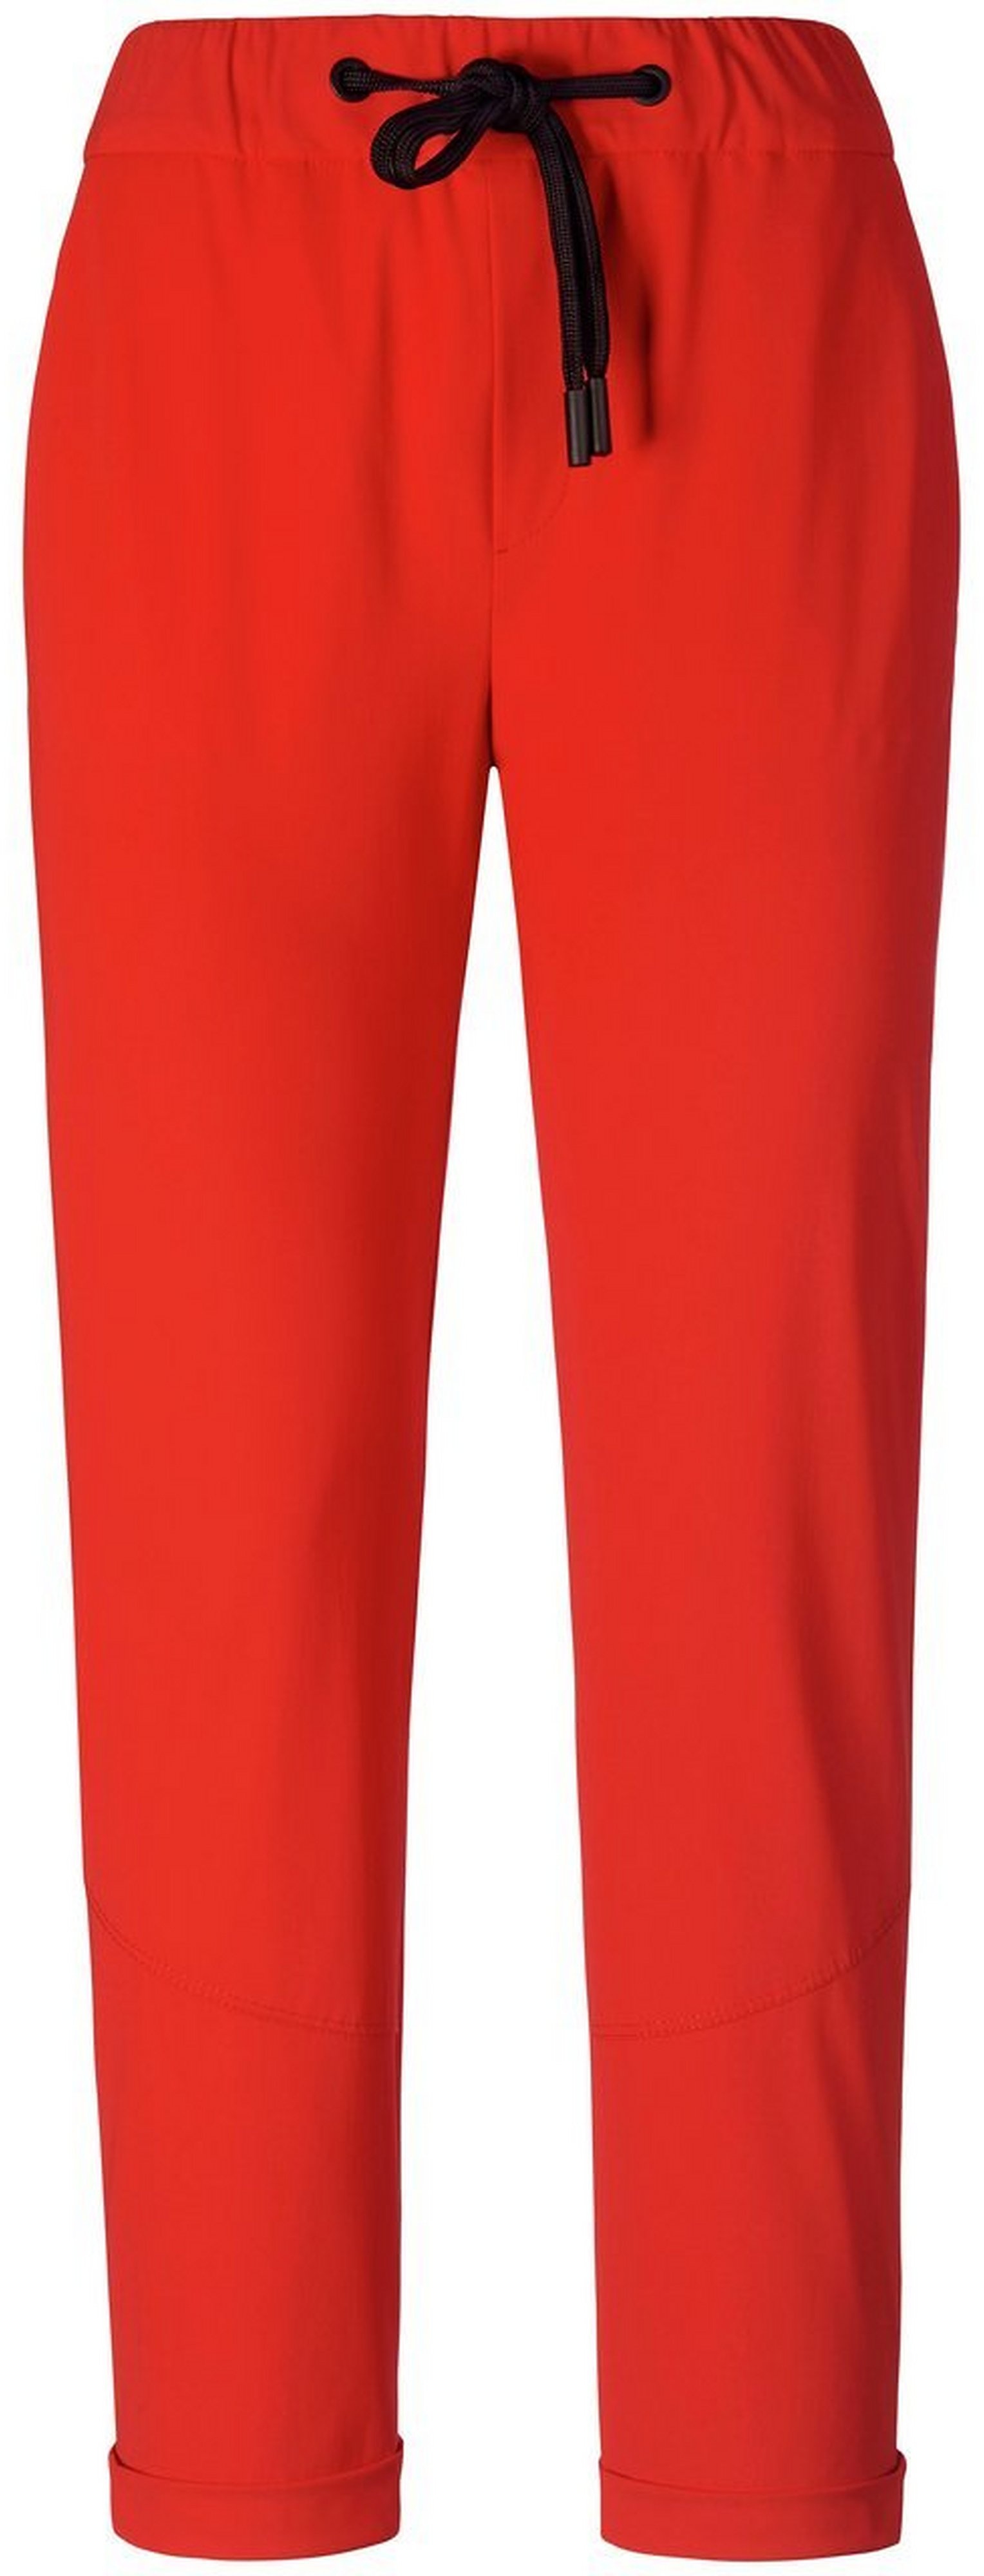 Le pantalon 7/8  MAC DAYDREAM rouge